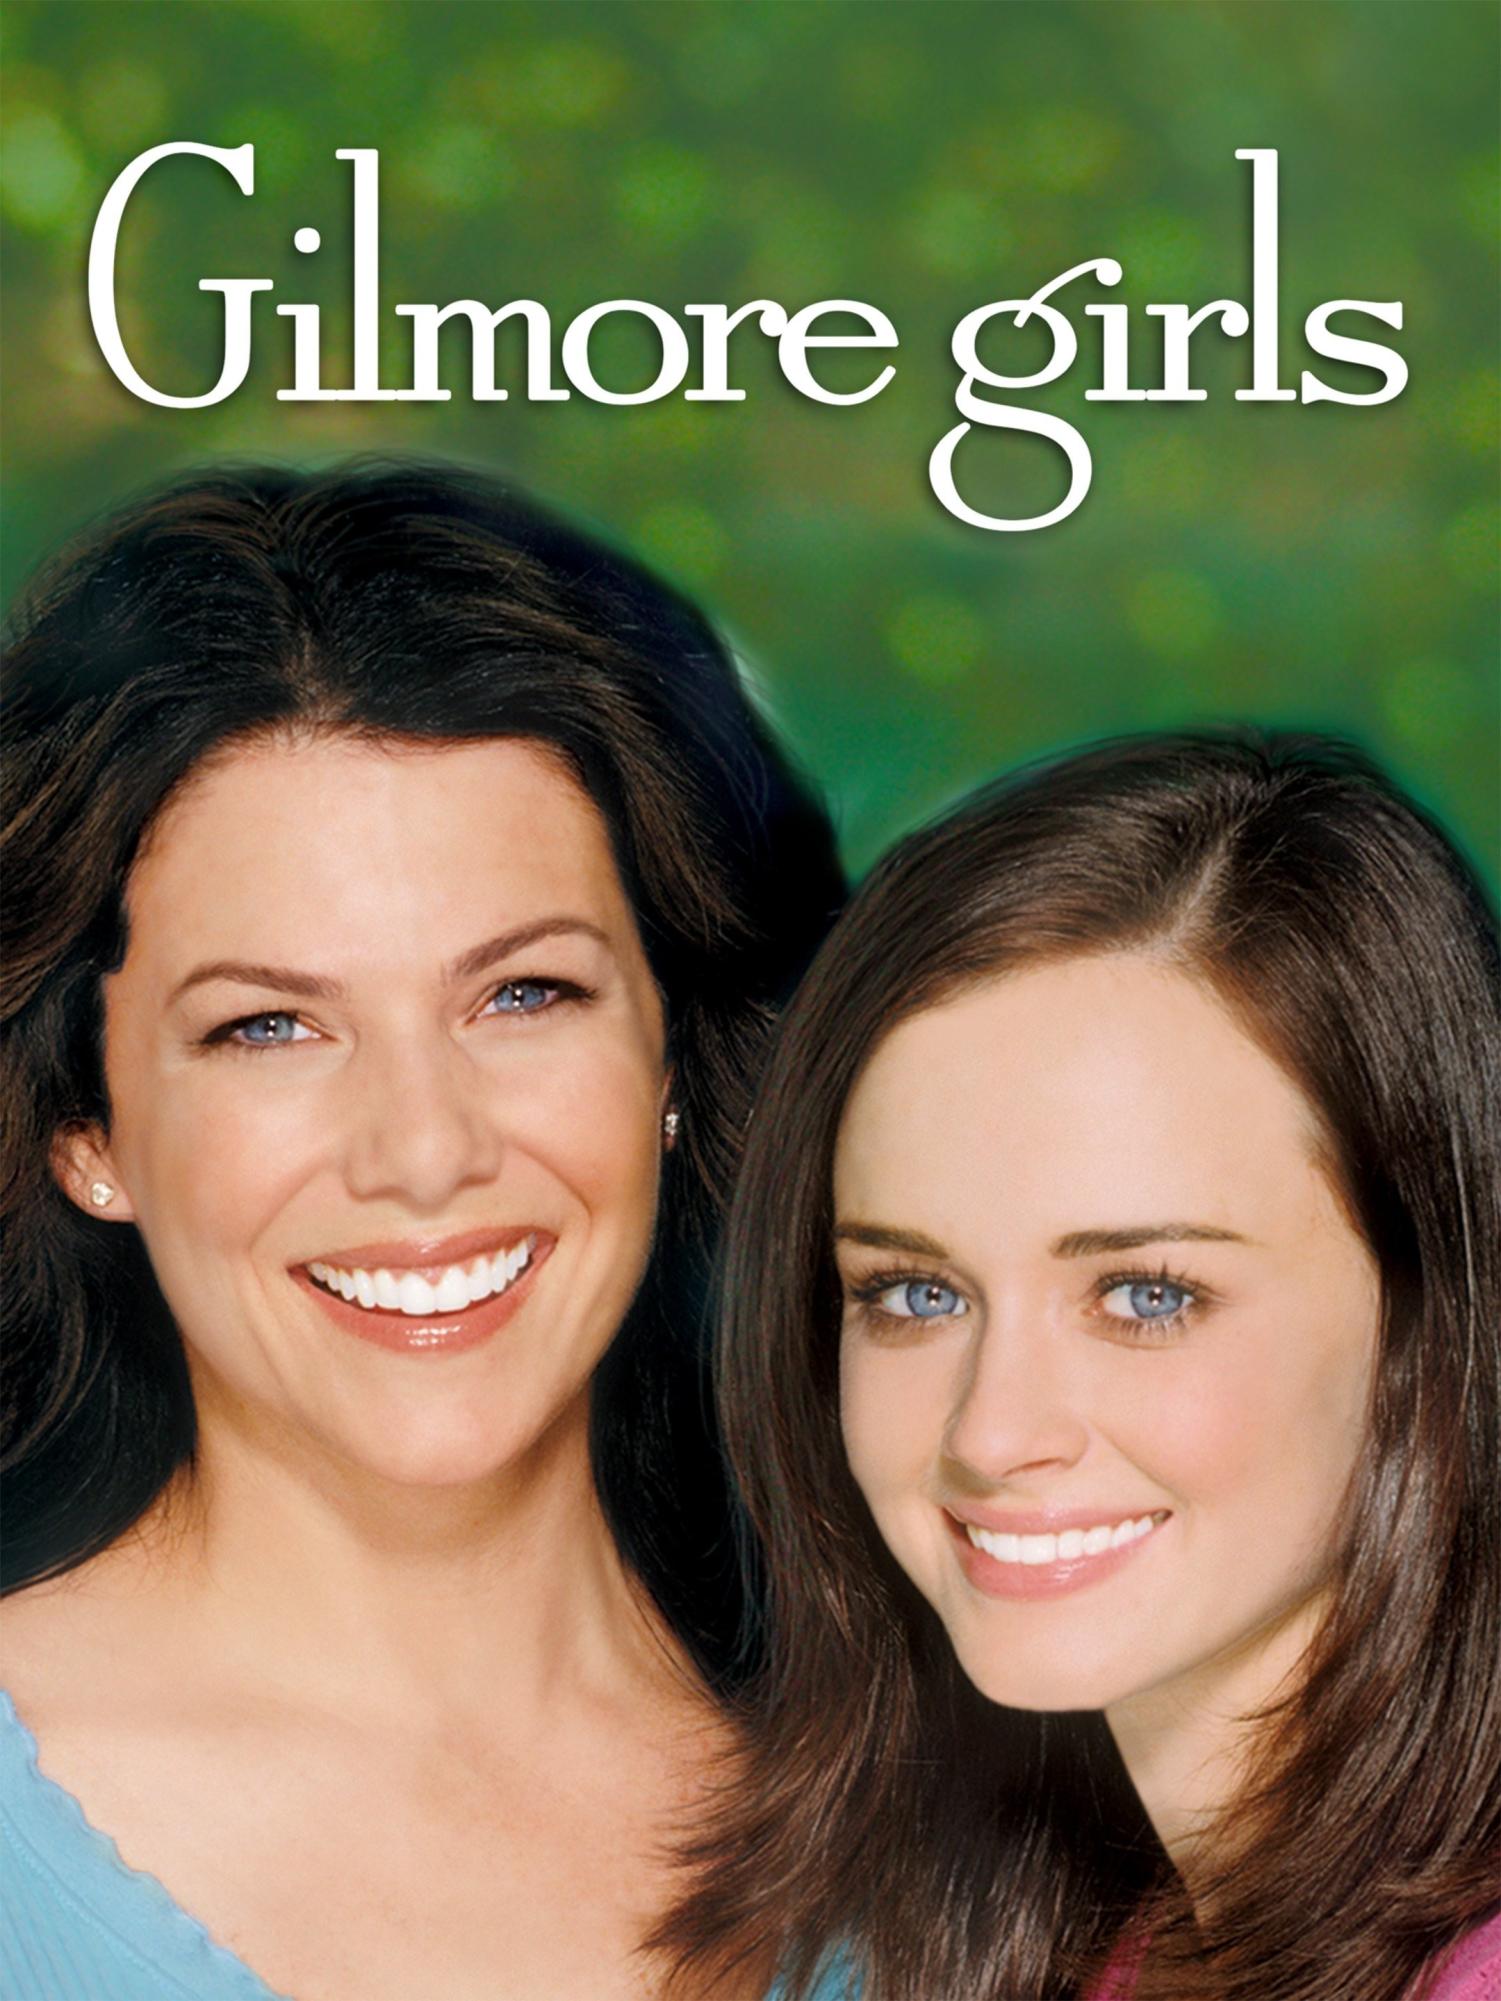 Gilmore Girls poster